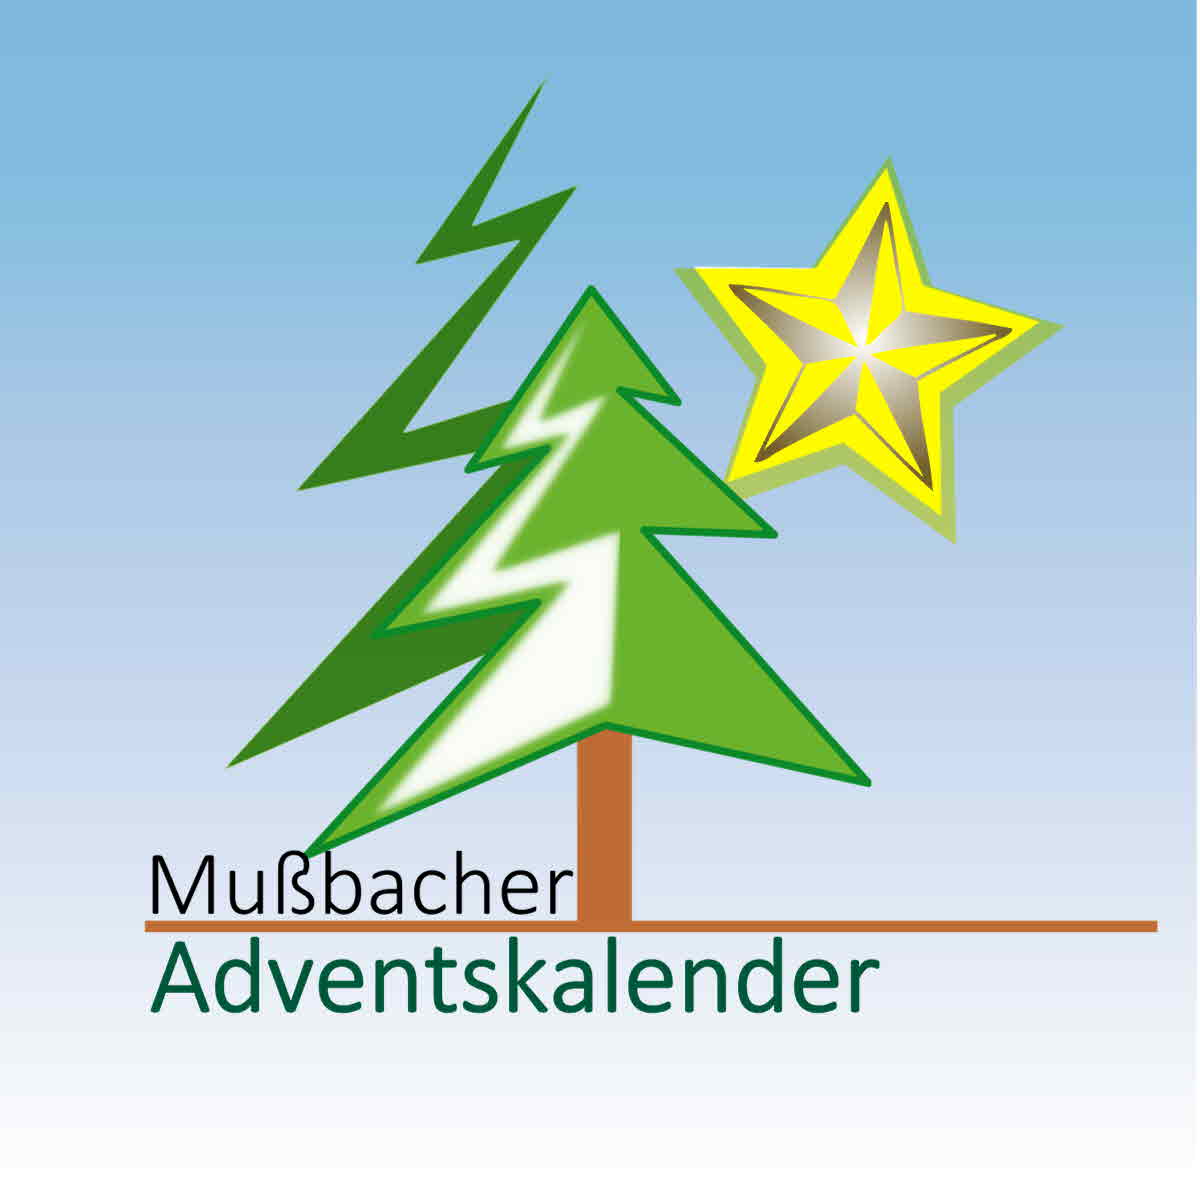 Mußbacher Adventskalender